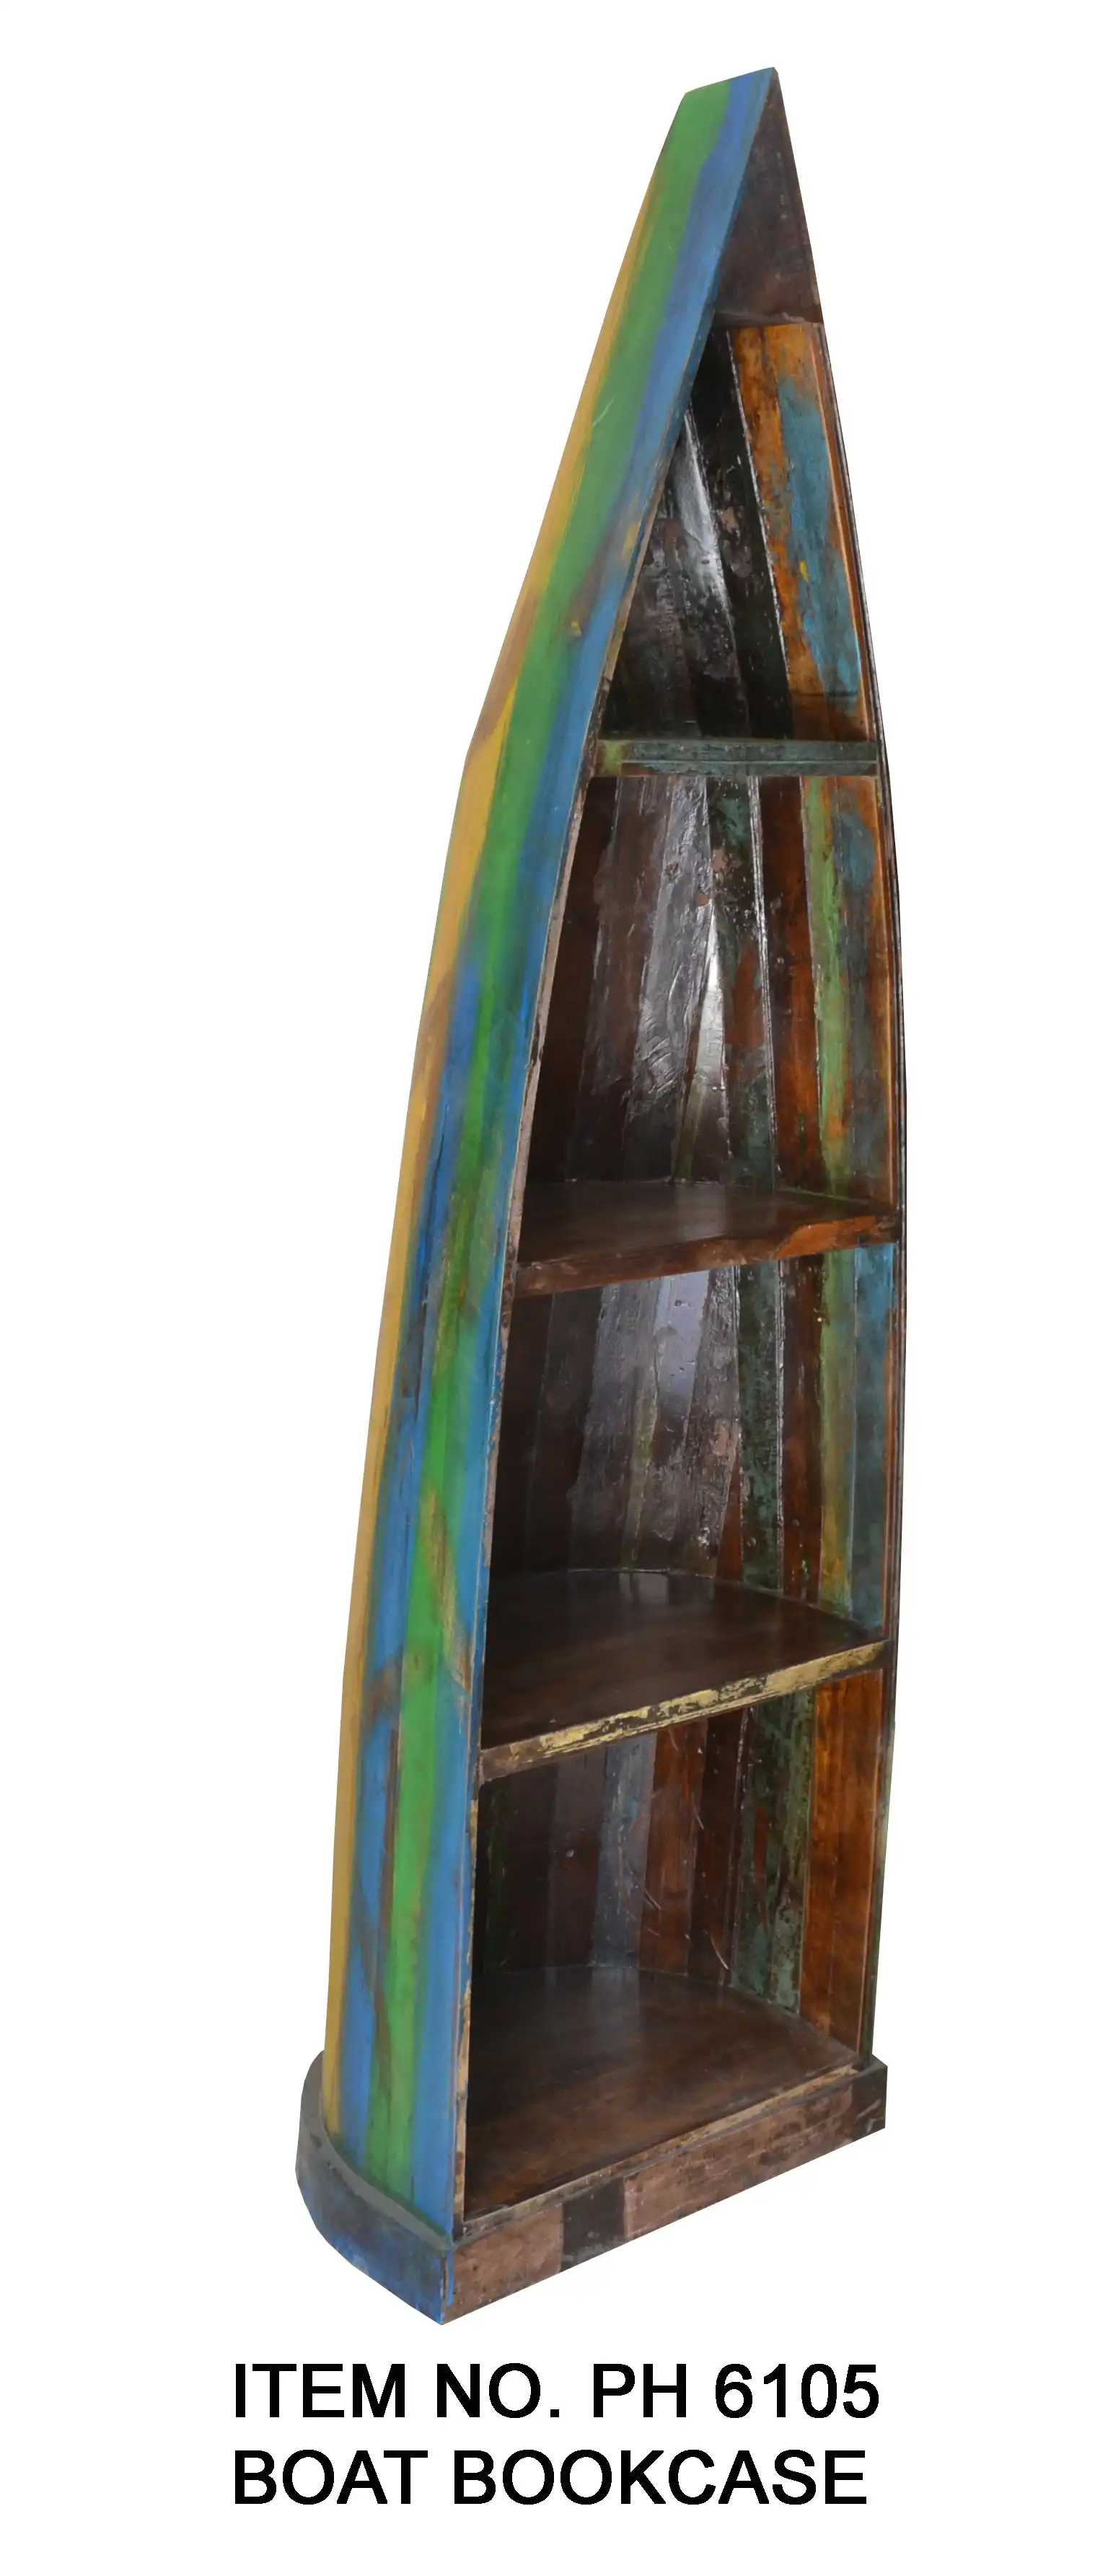 Reclaimed Wood Boat Bookcase - popular handicrafts